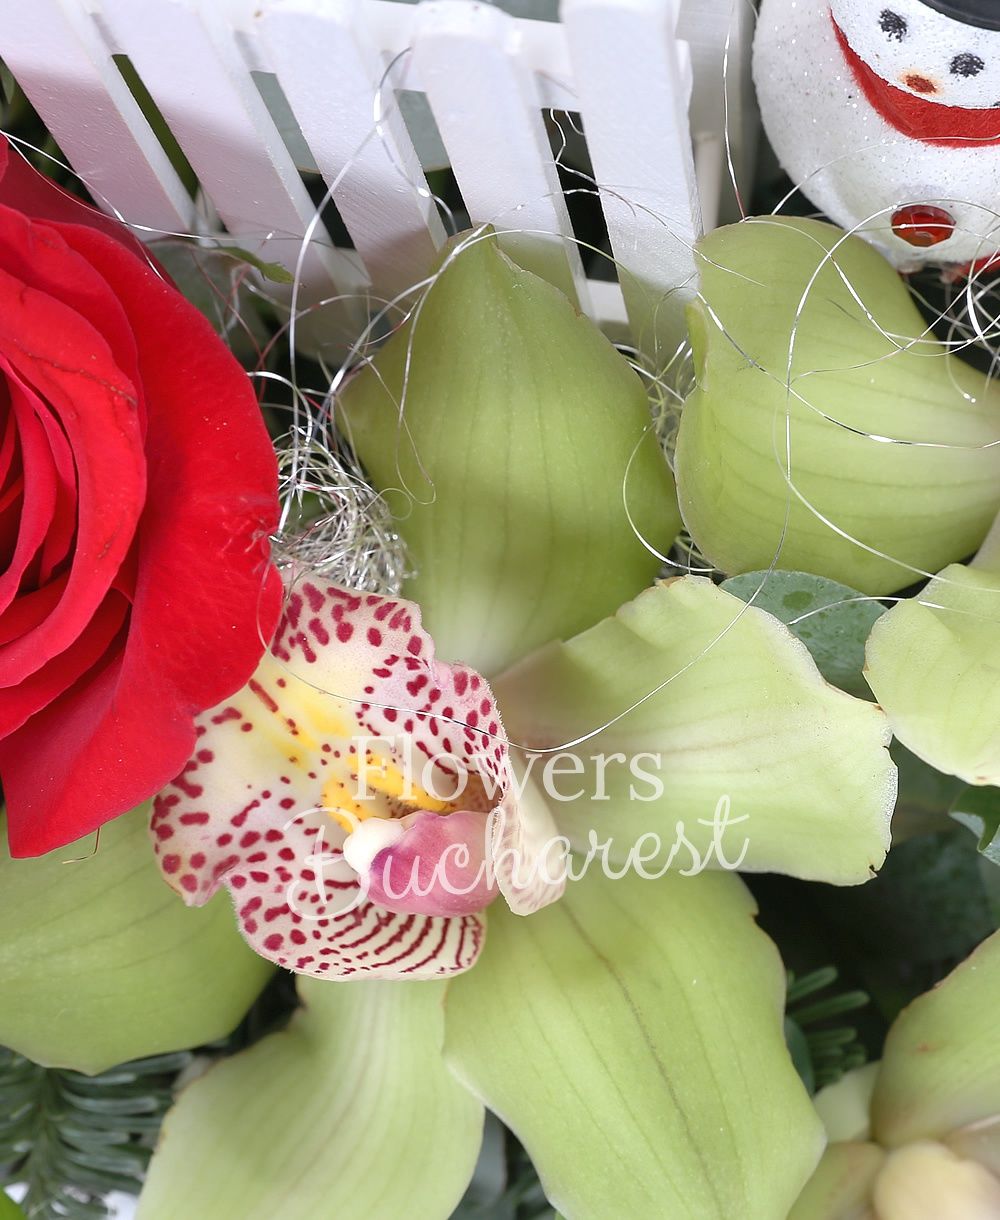 3 red roses, 3 cymbidium, 5 freesias, 1 white lisianthus, waxflower, greenery, silver fir, christmas decorations, basket